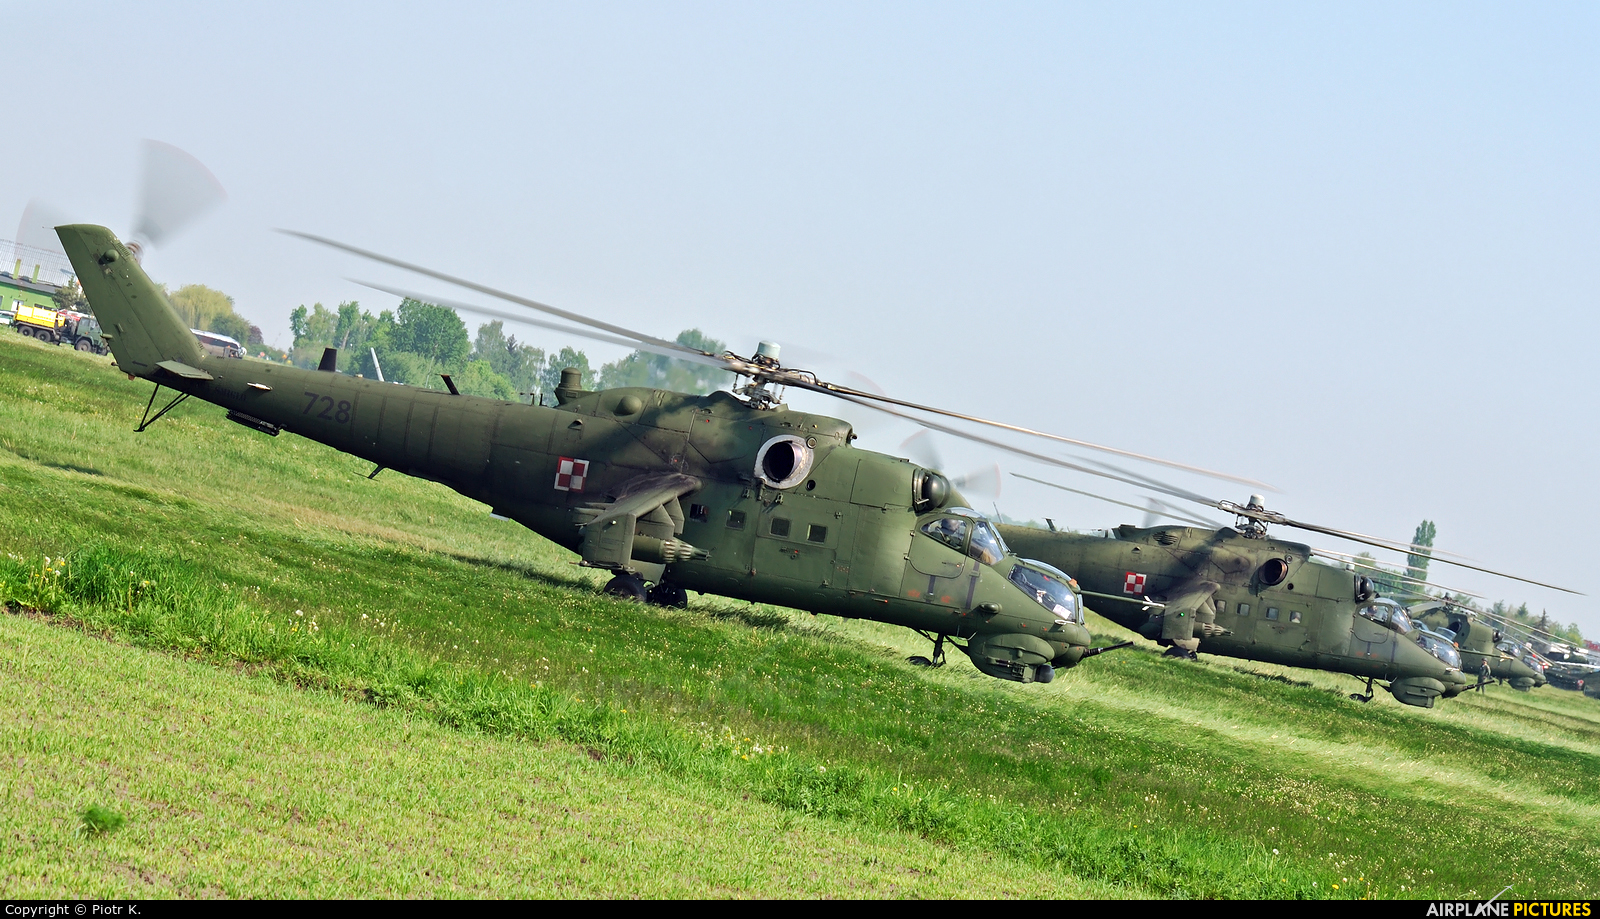 Poland - Army 728 aircraft at Inowrocław